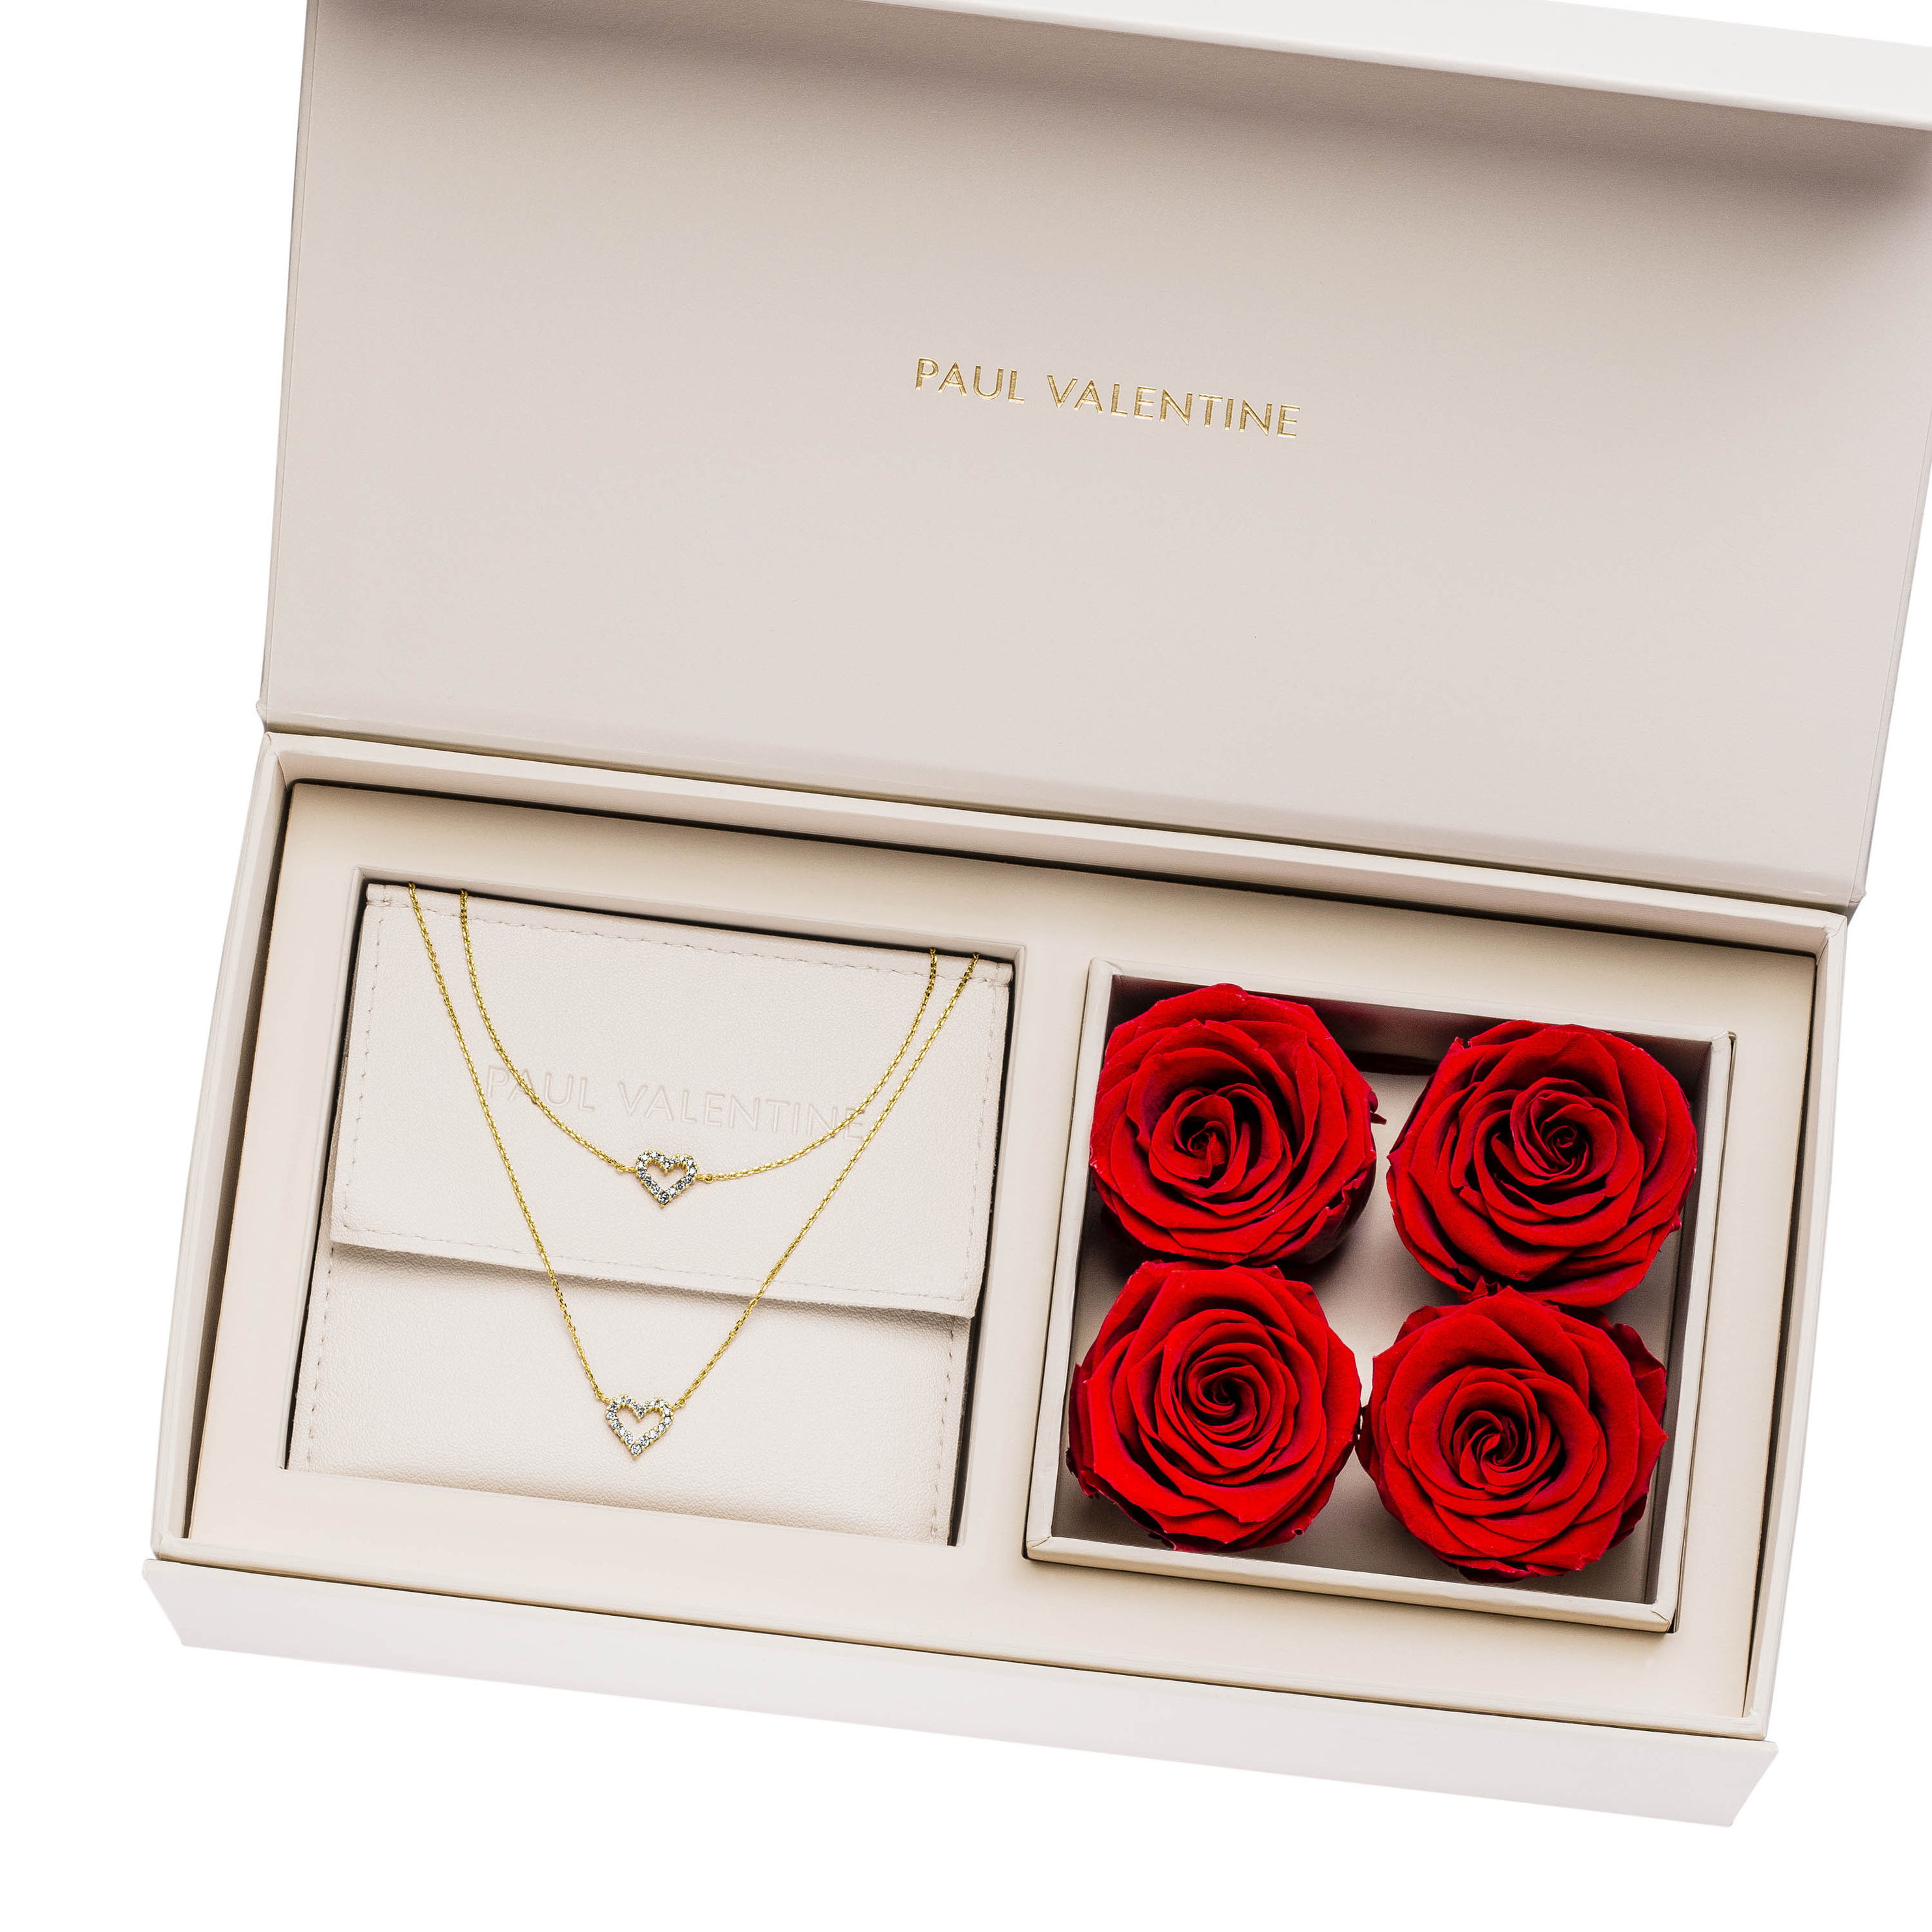 Paul Valentine Geschenkset Radiant Heart Rosebox Messing Farbe: 14K  vergoldet | Weltbild.ch